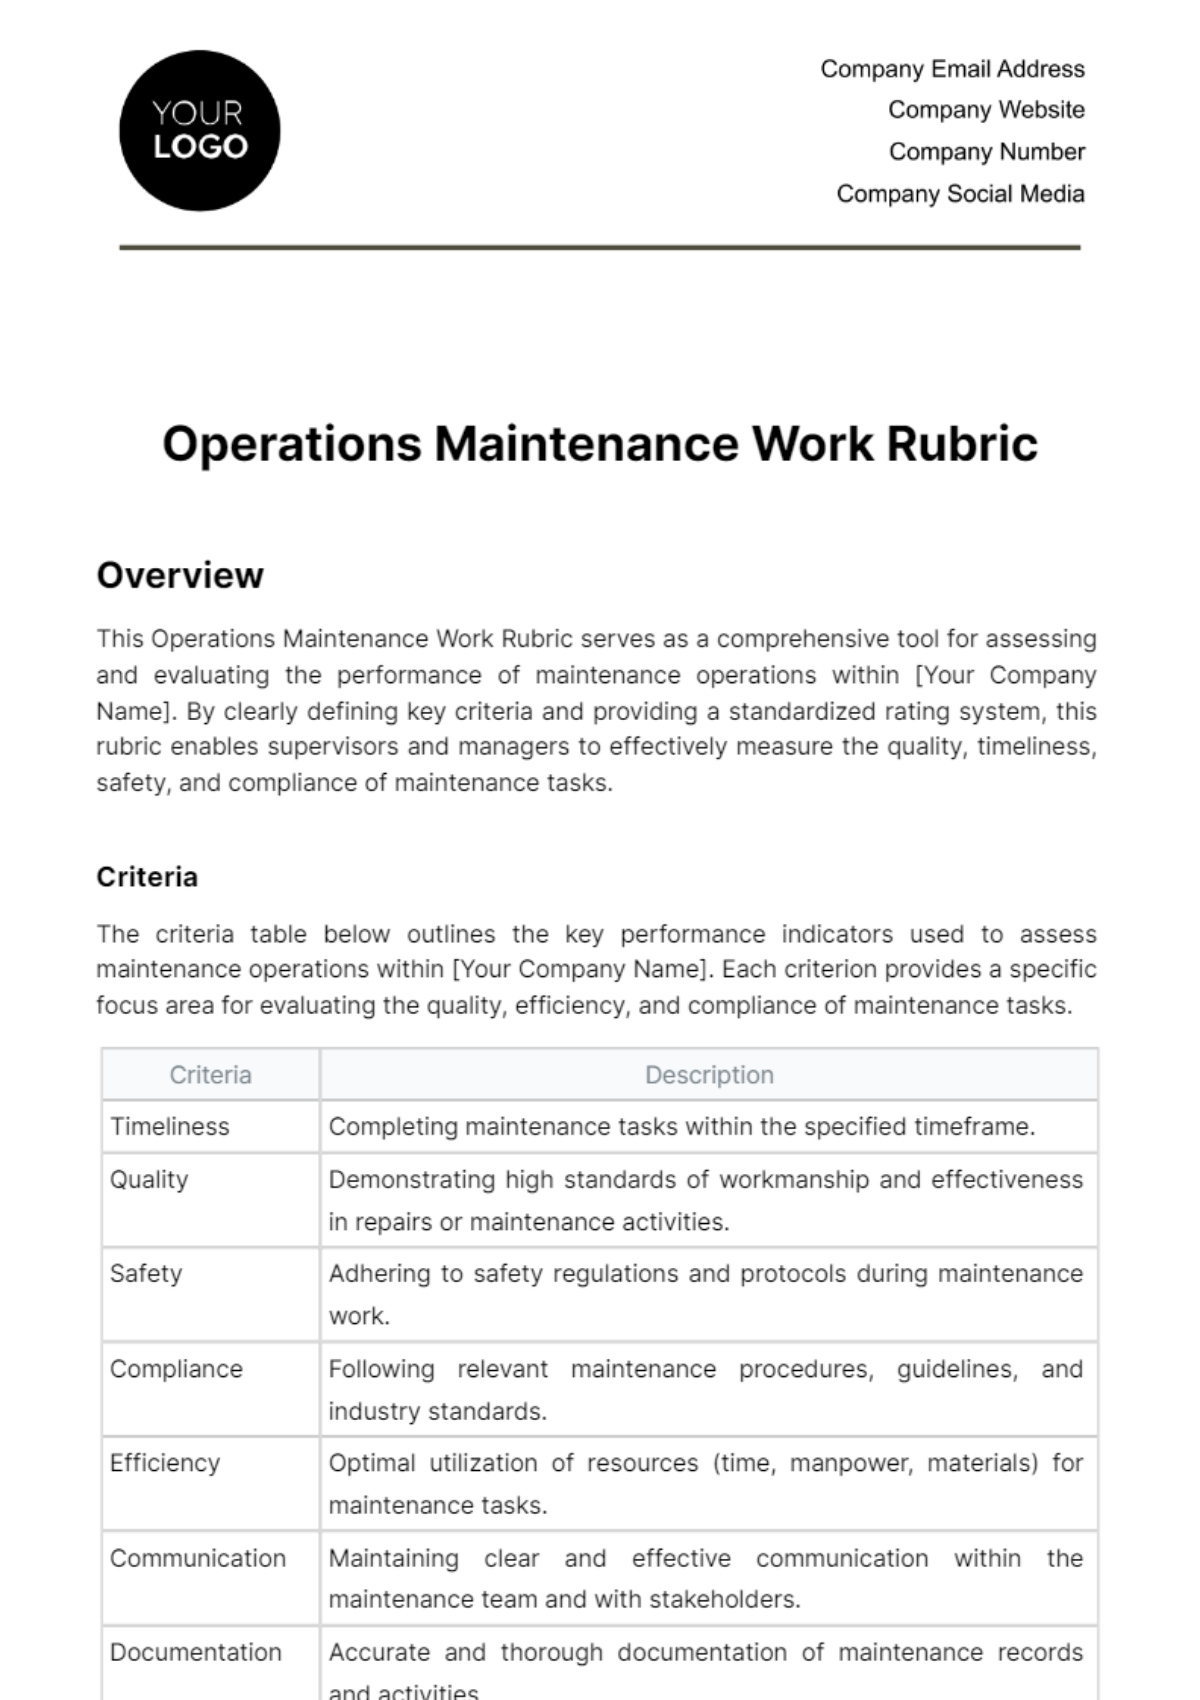 Free Operations Maintenance Work Rubric Template